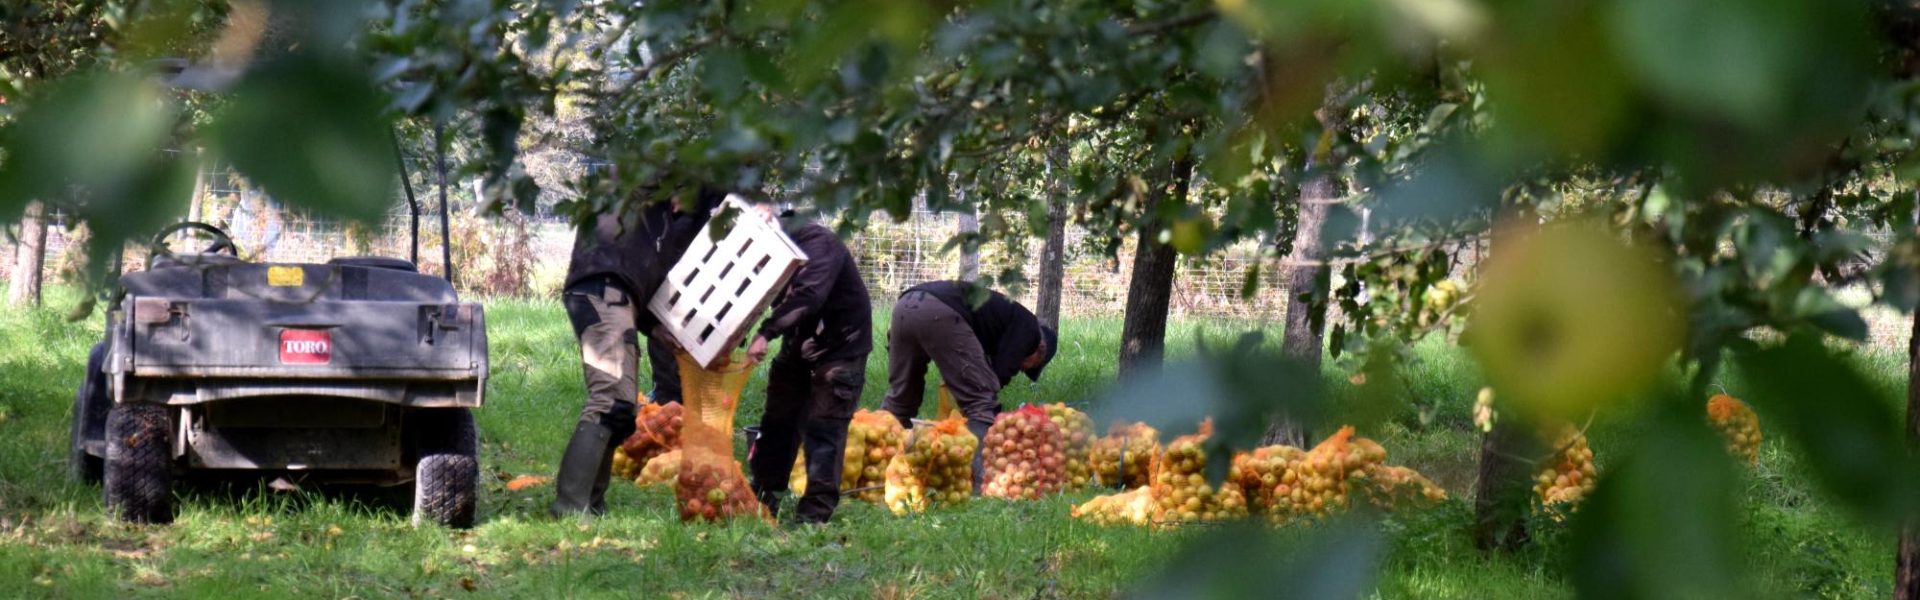 cueillette pommes jardins